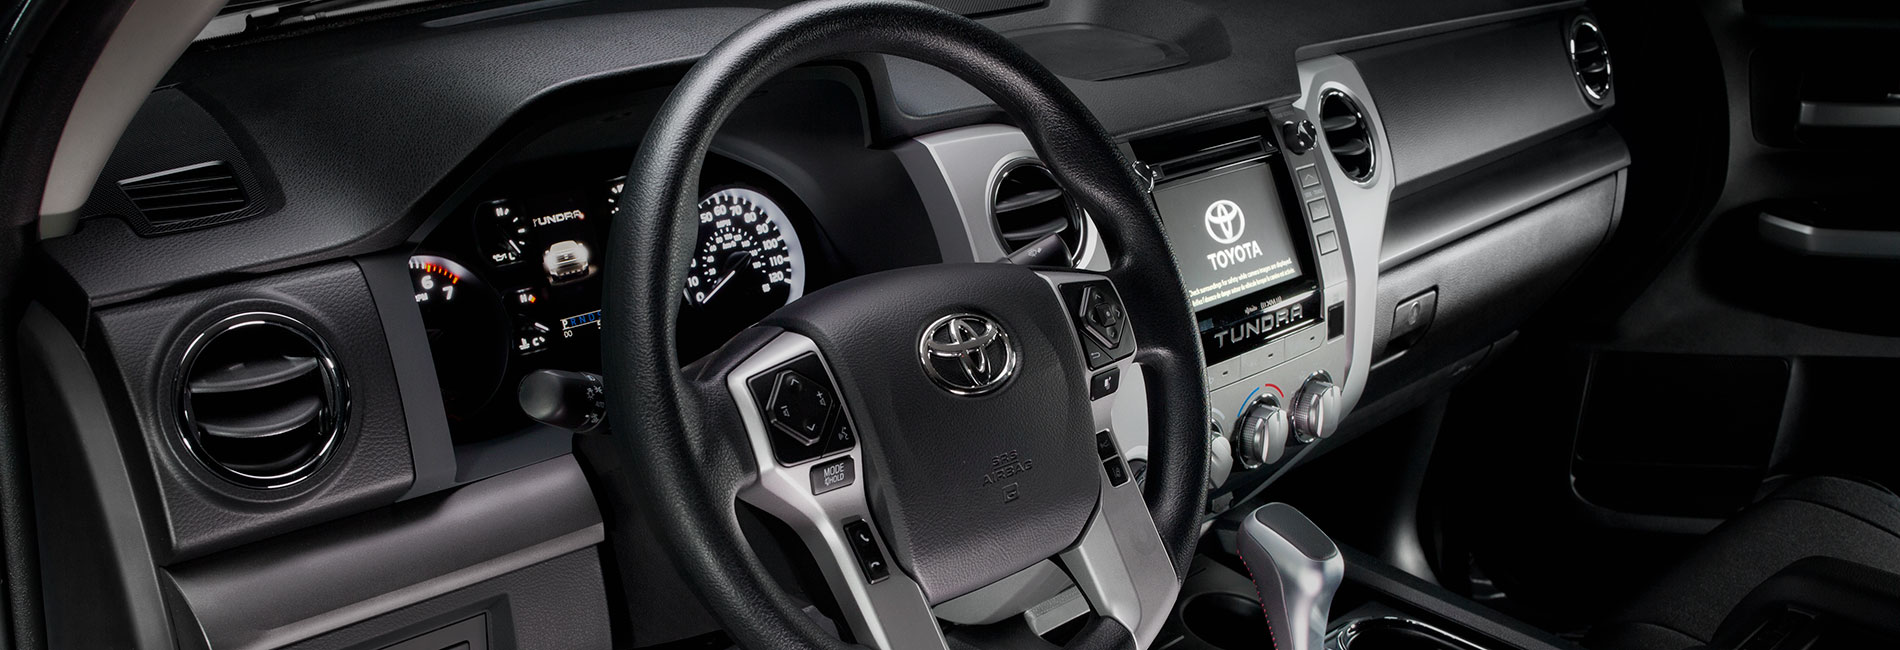 Toyota Tundra Interior Vehicle Features